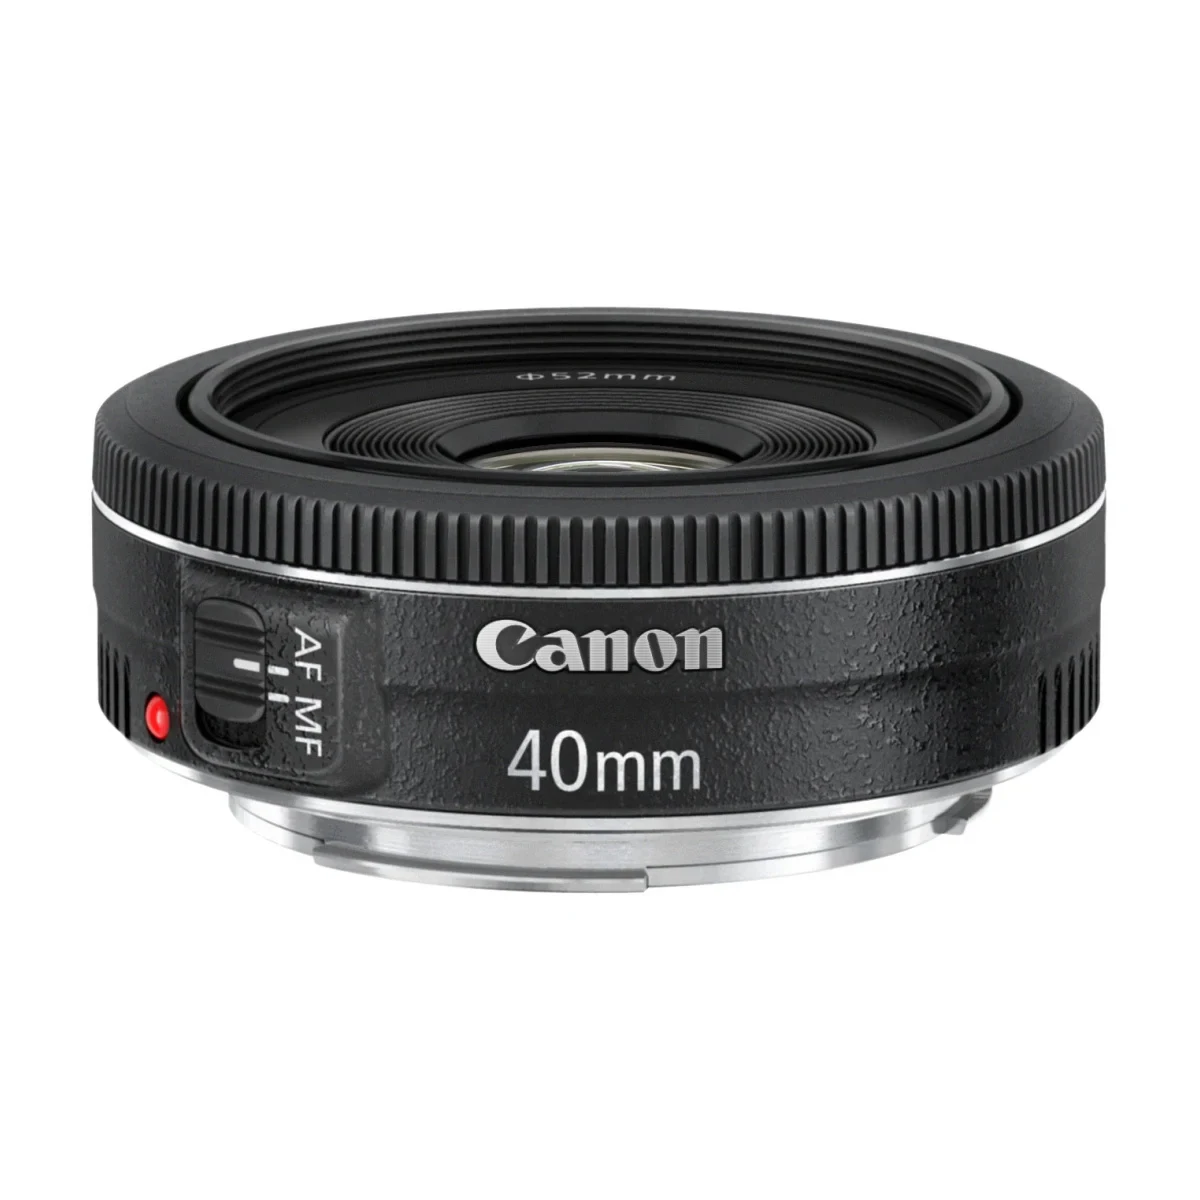 

Original Canon EF 40mm F/2.8 STM Pancake Lens Portrait Fixed with Full Frame for DSLR Cameras